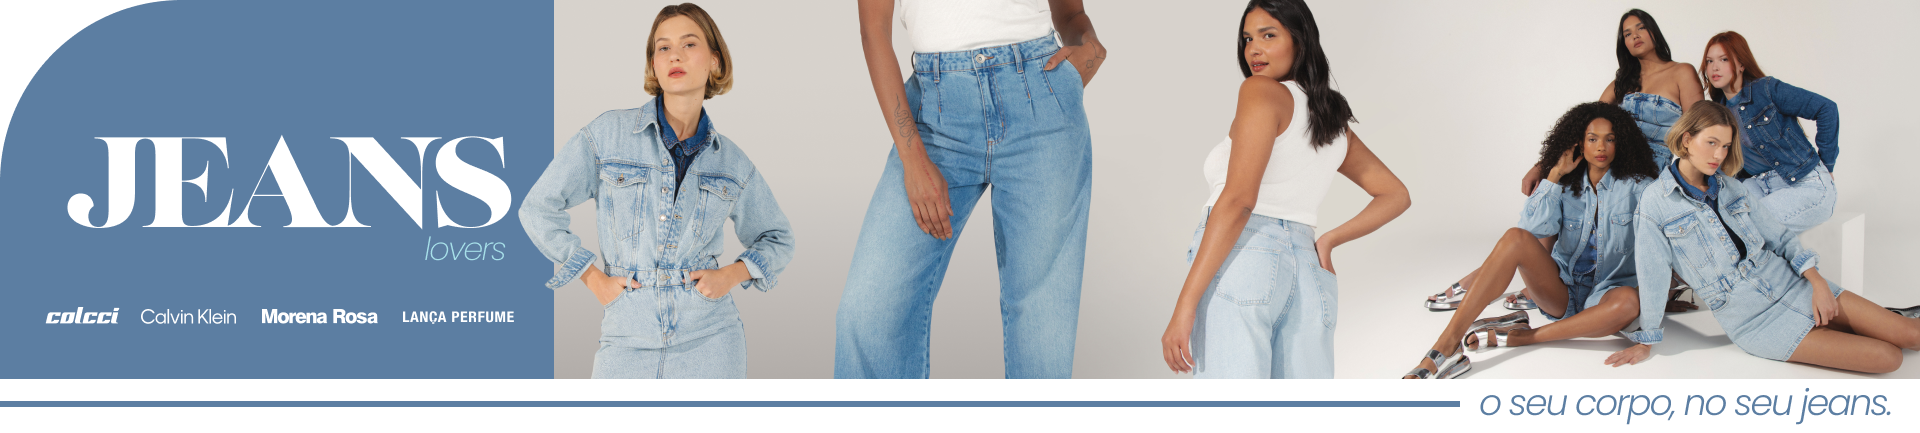 Jeans lovers - o seu corpo, no seu jeans.